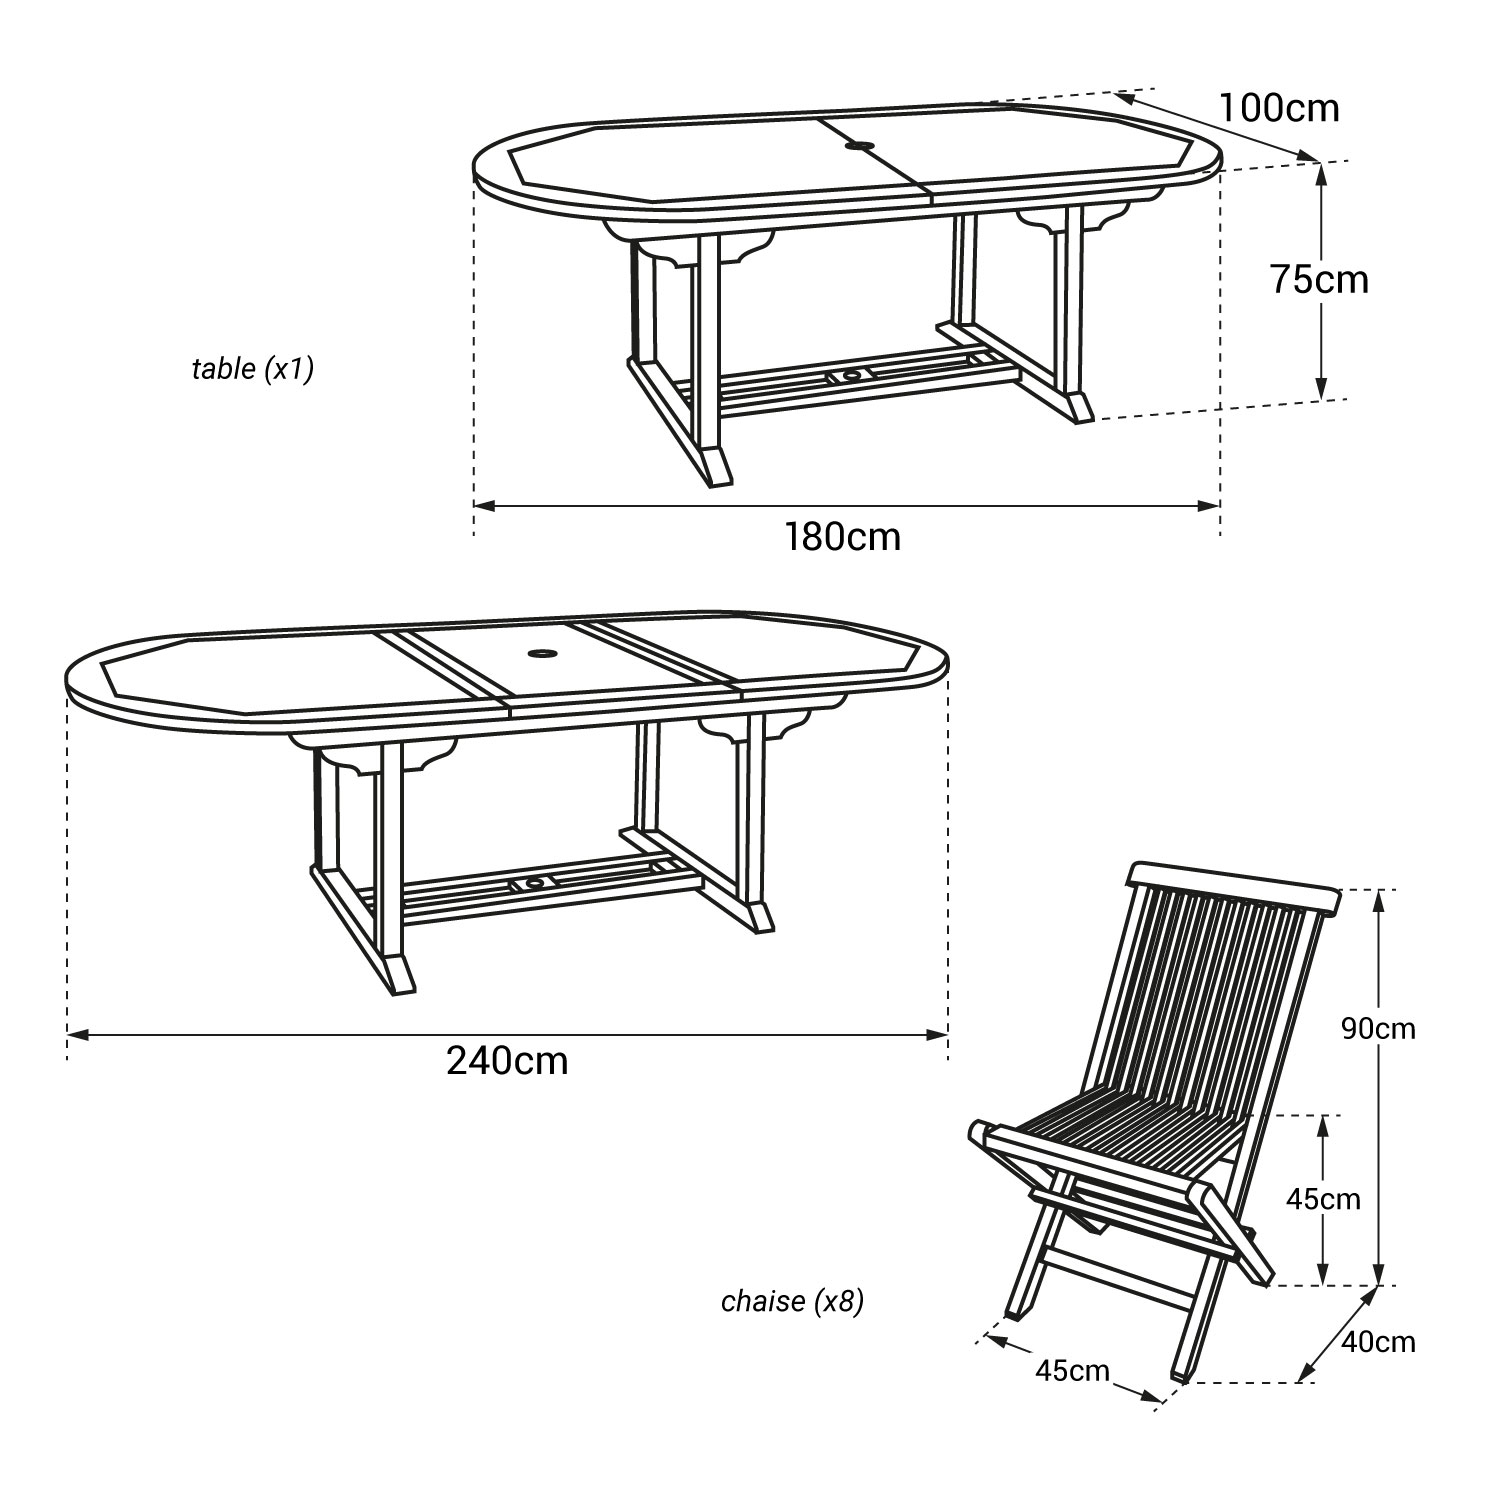 Muebles de jardín de teca LOMBOK - mesa extensible ovalada - 8 plazas